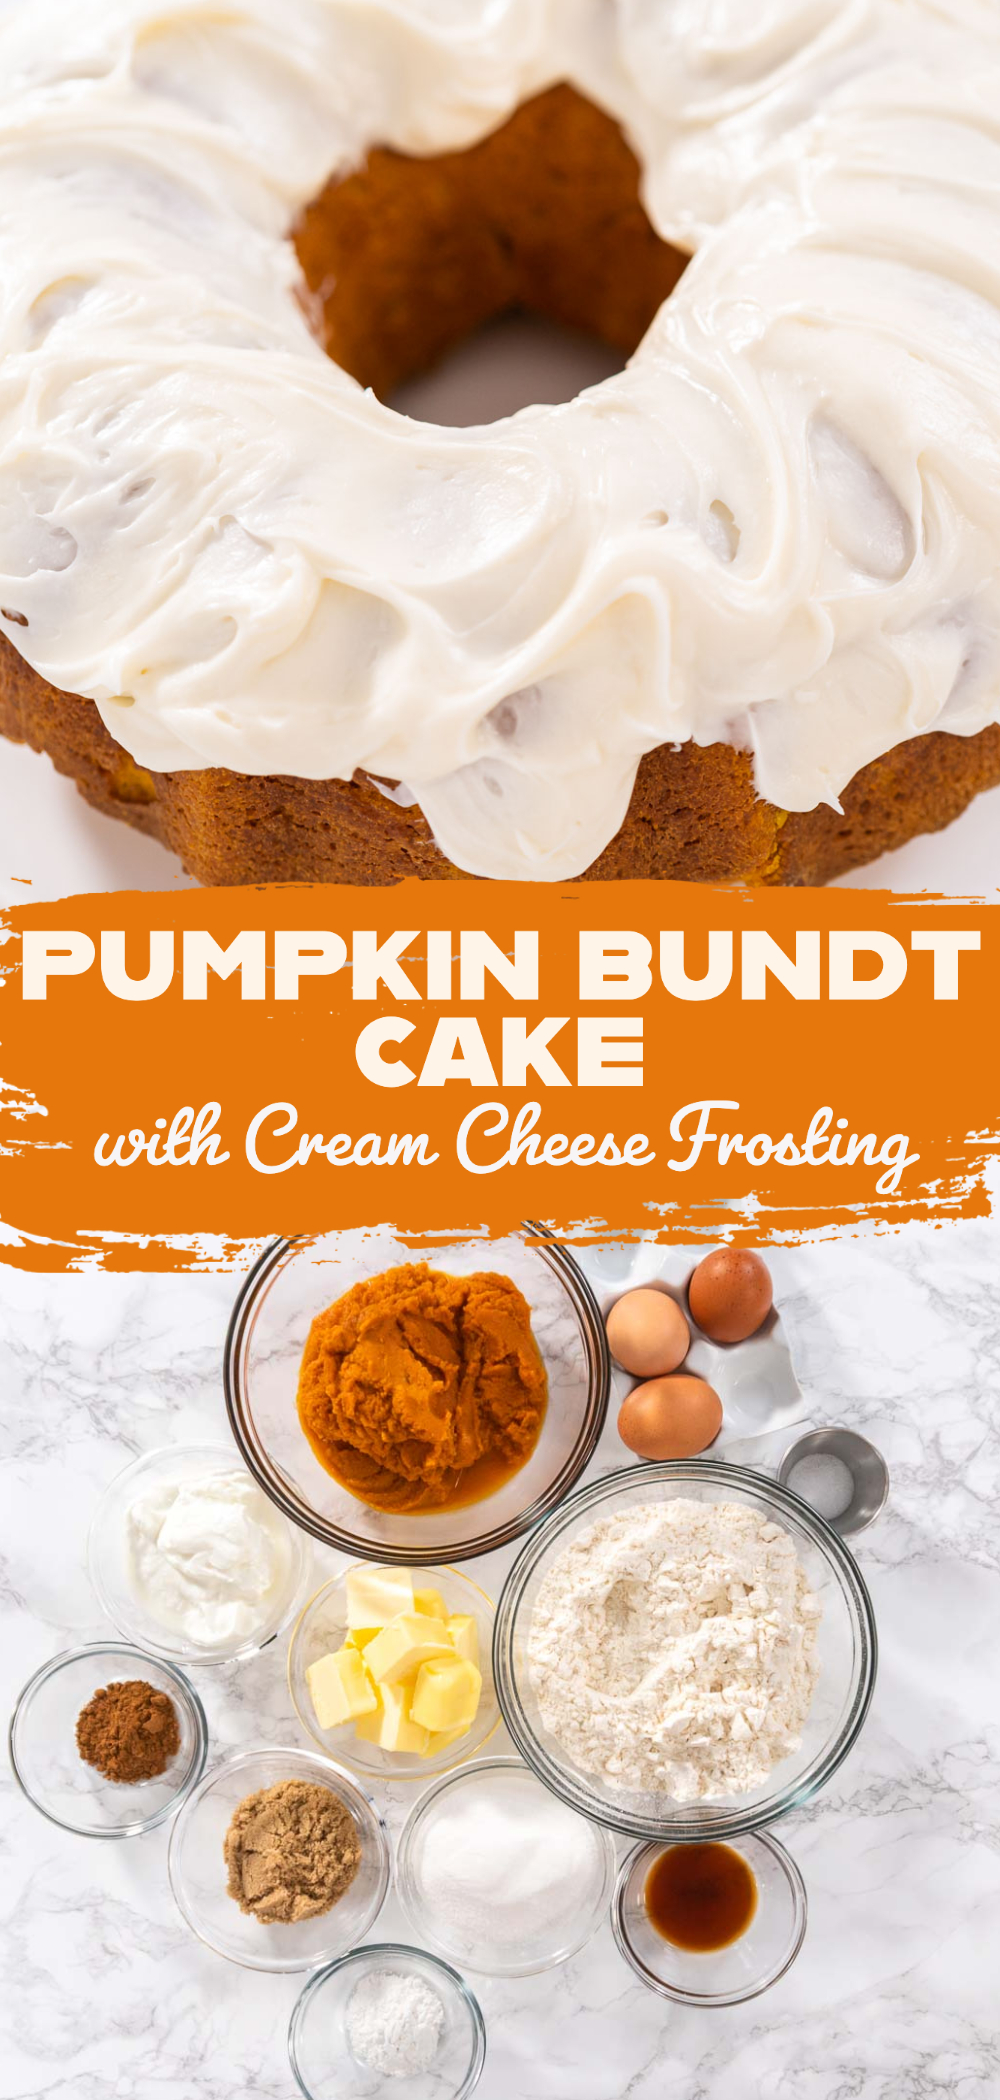 Pumpkin bundt cake with cream cheese frosting